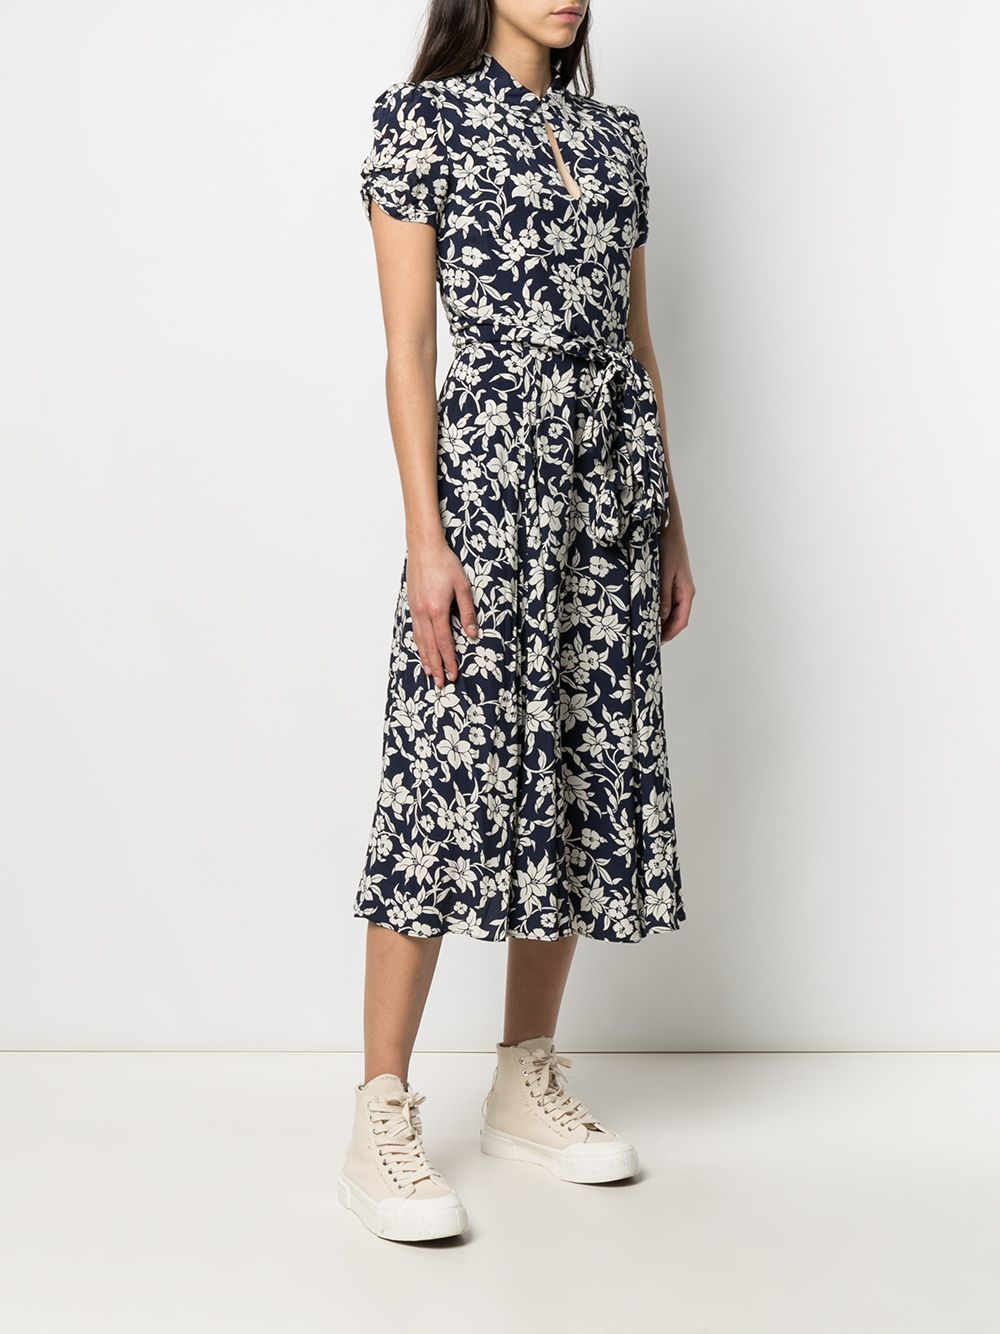 Polo Ralph Lauren all-over Floral Print Dress - Farfetch